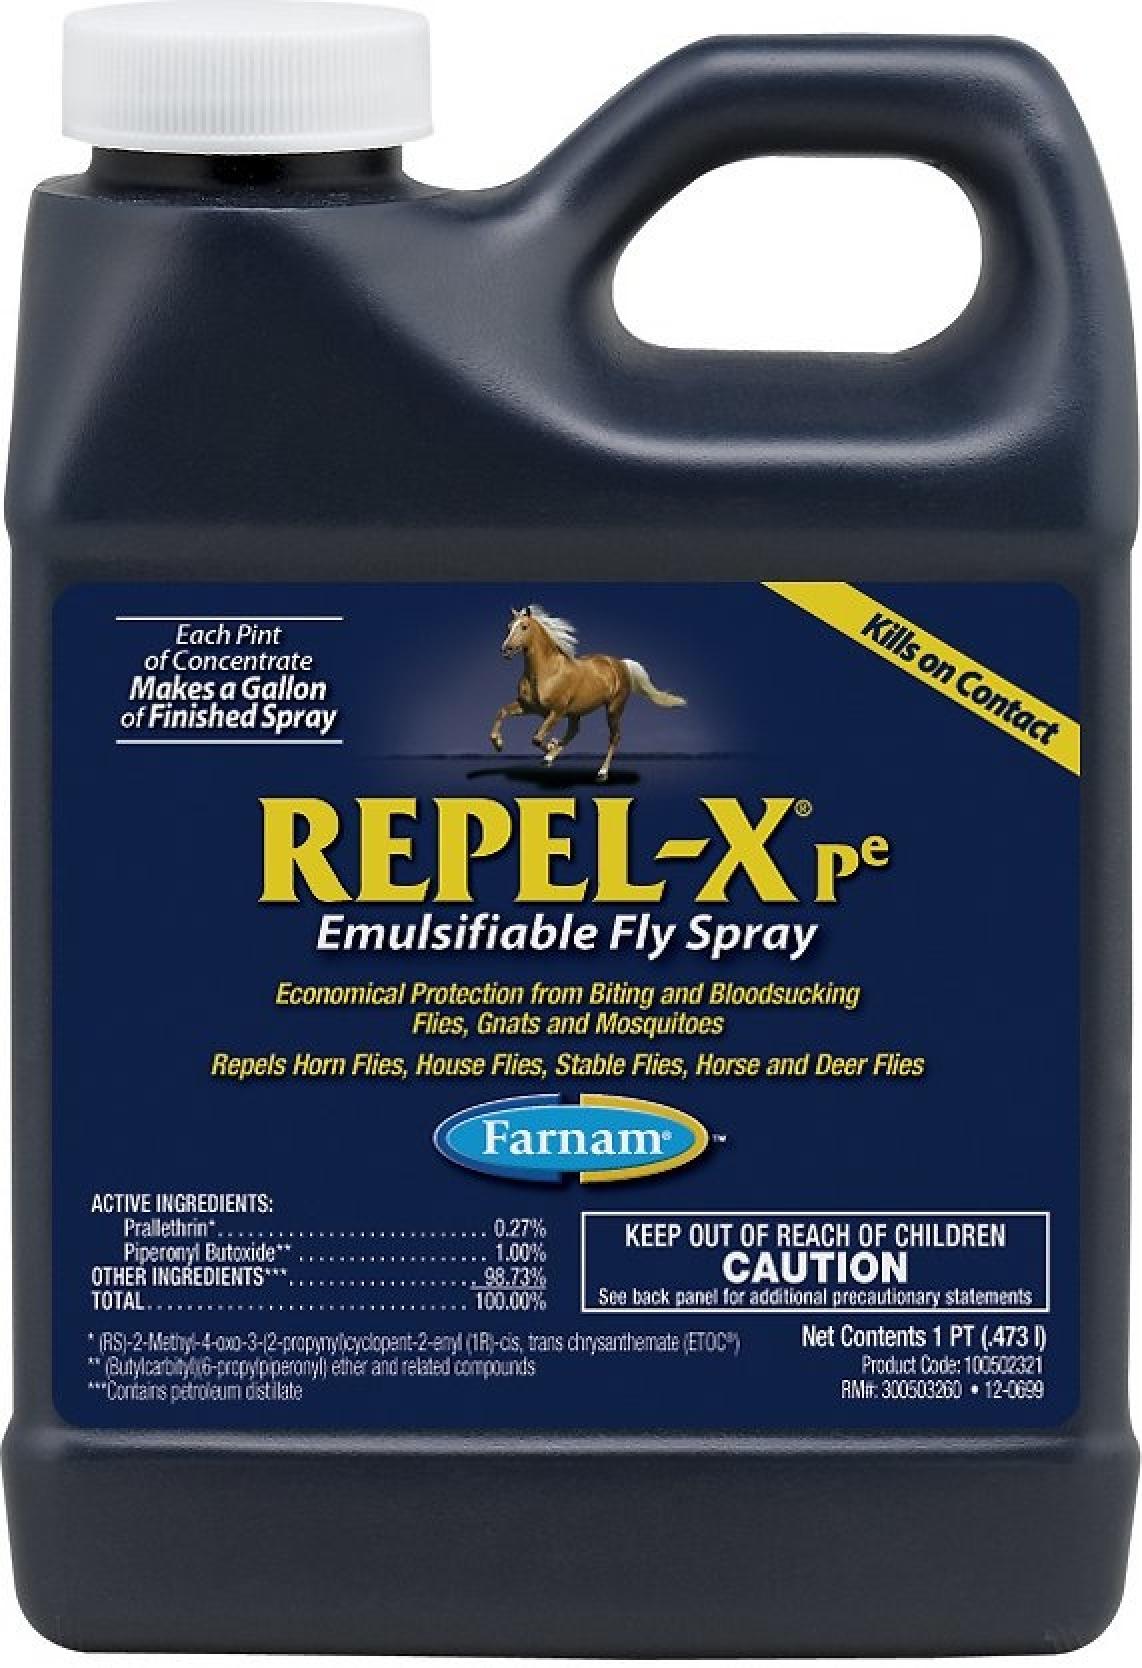 Farnam Repel-X Pe Emulsifiable Fly Spray